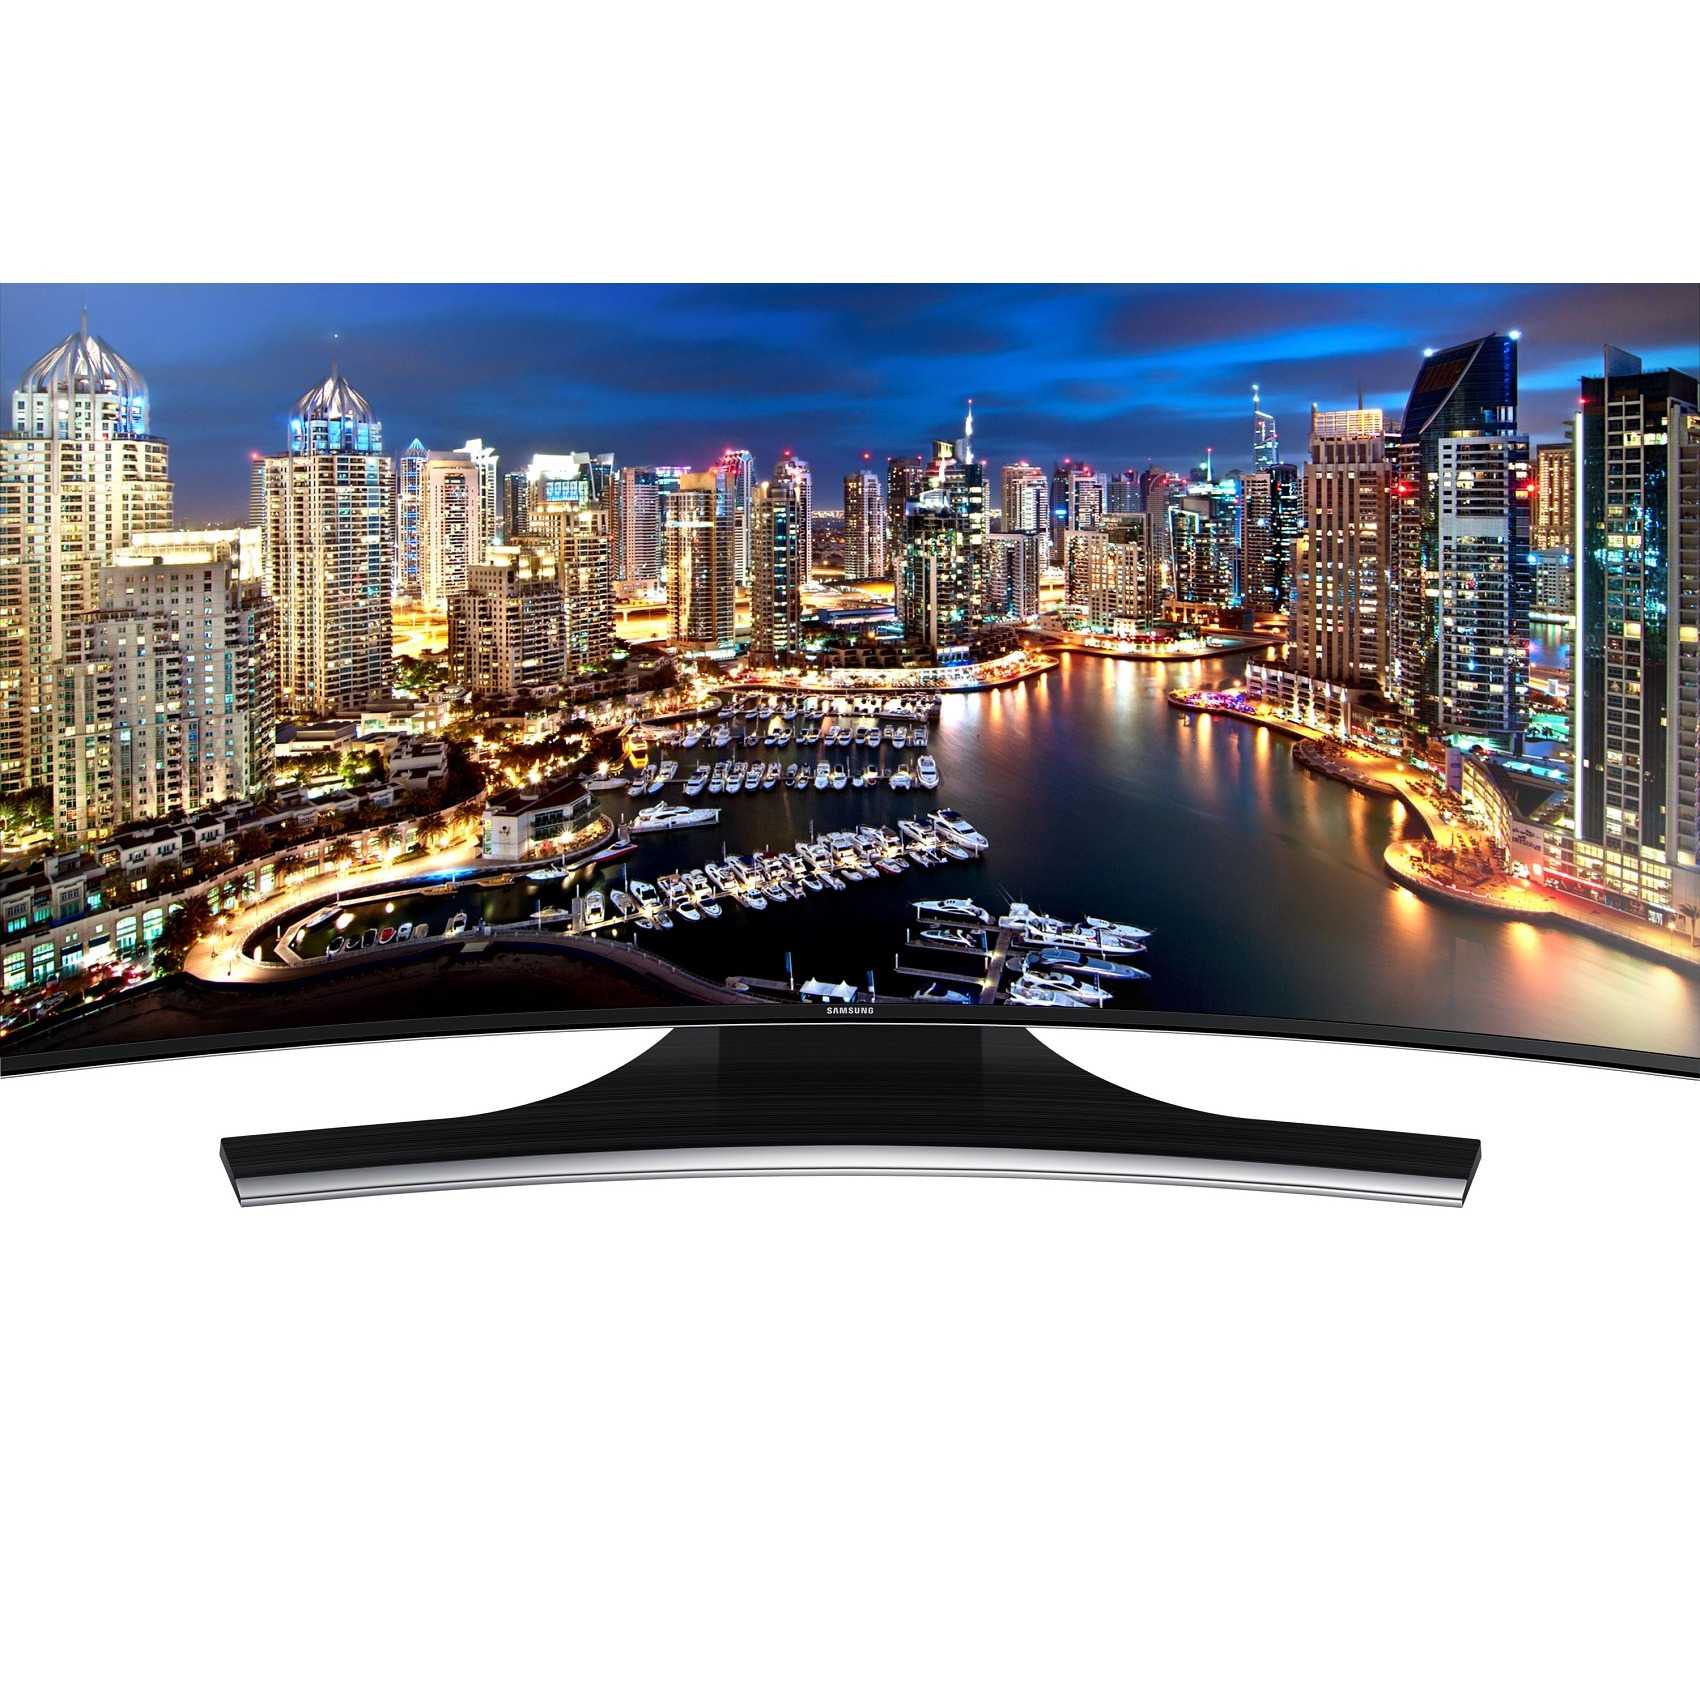 4k-телевизор 55" samsung ue55hu8500 — купить, цена и характеристики, отзывы